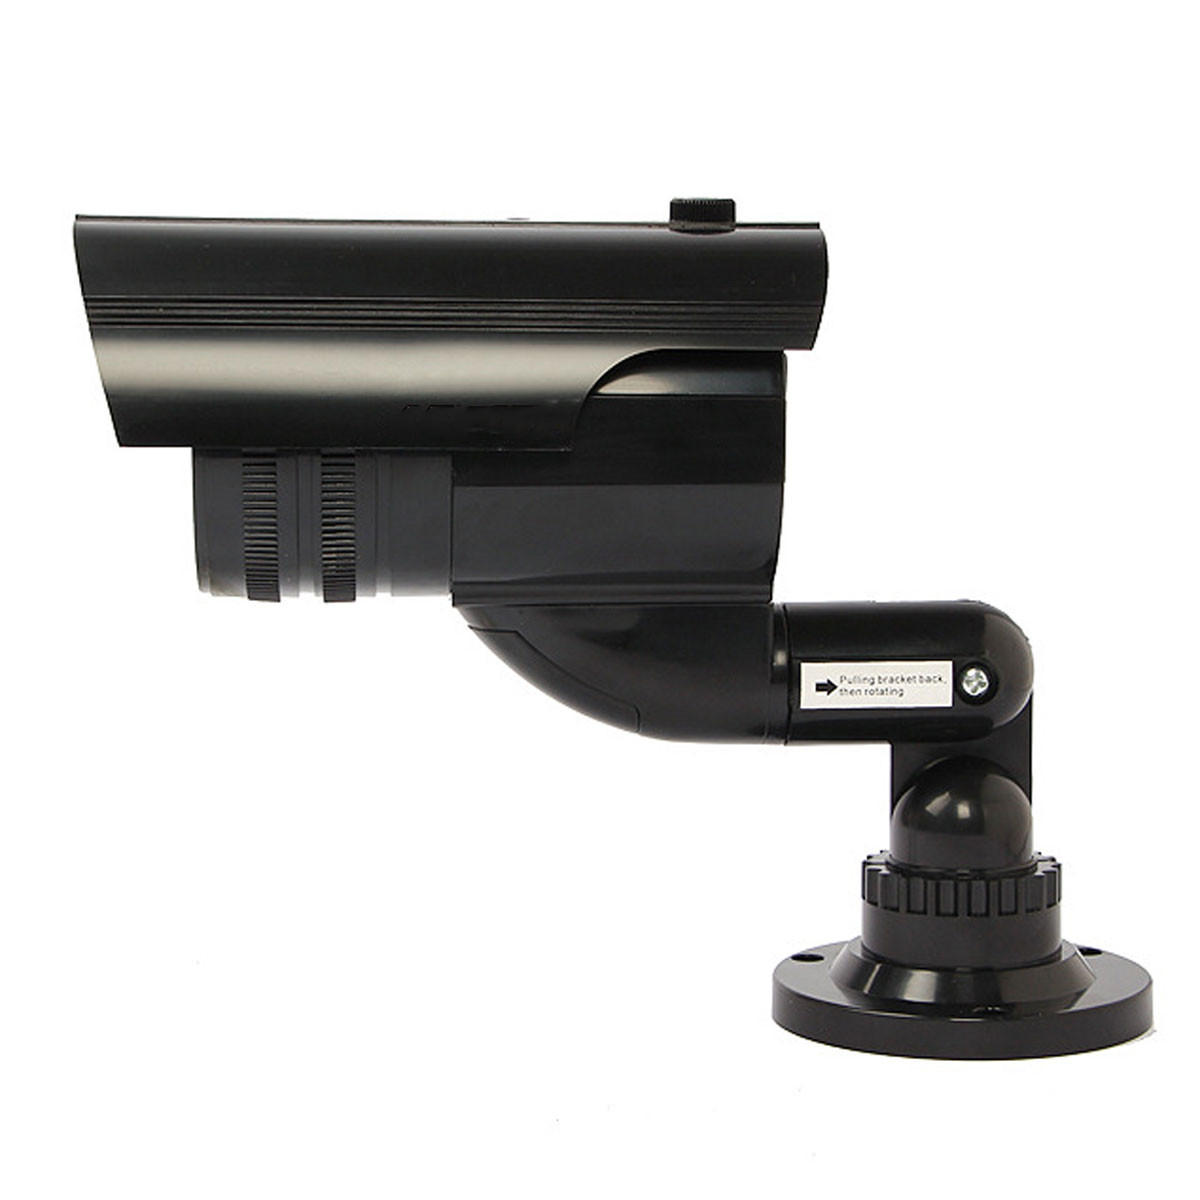 Simulatiemonitor Valse camera Simulatiecamera met verlichting Namaak IP-camera